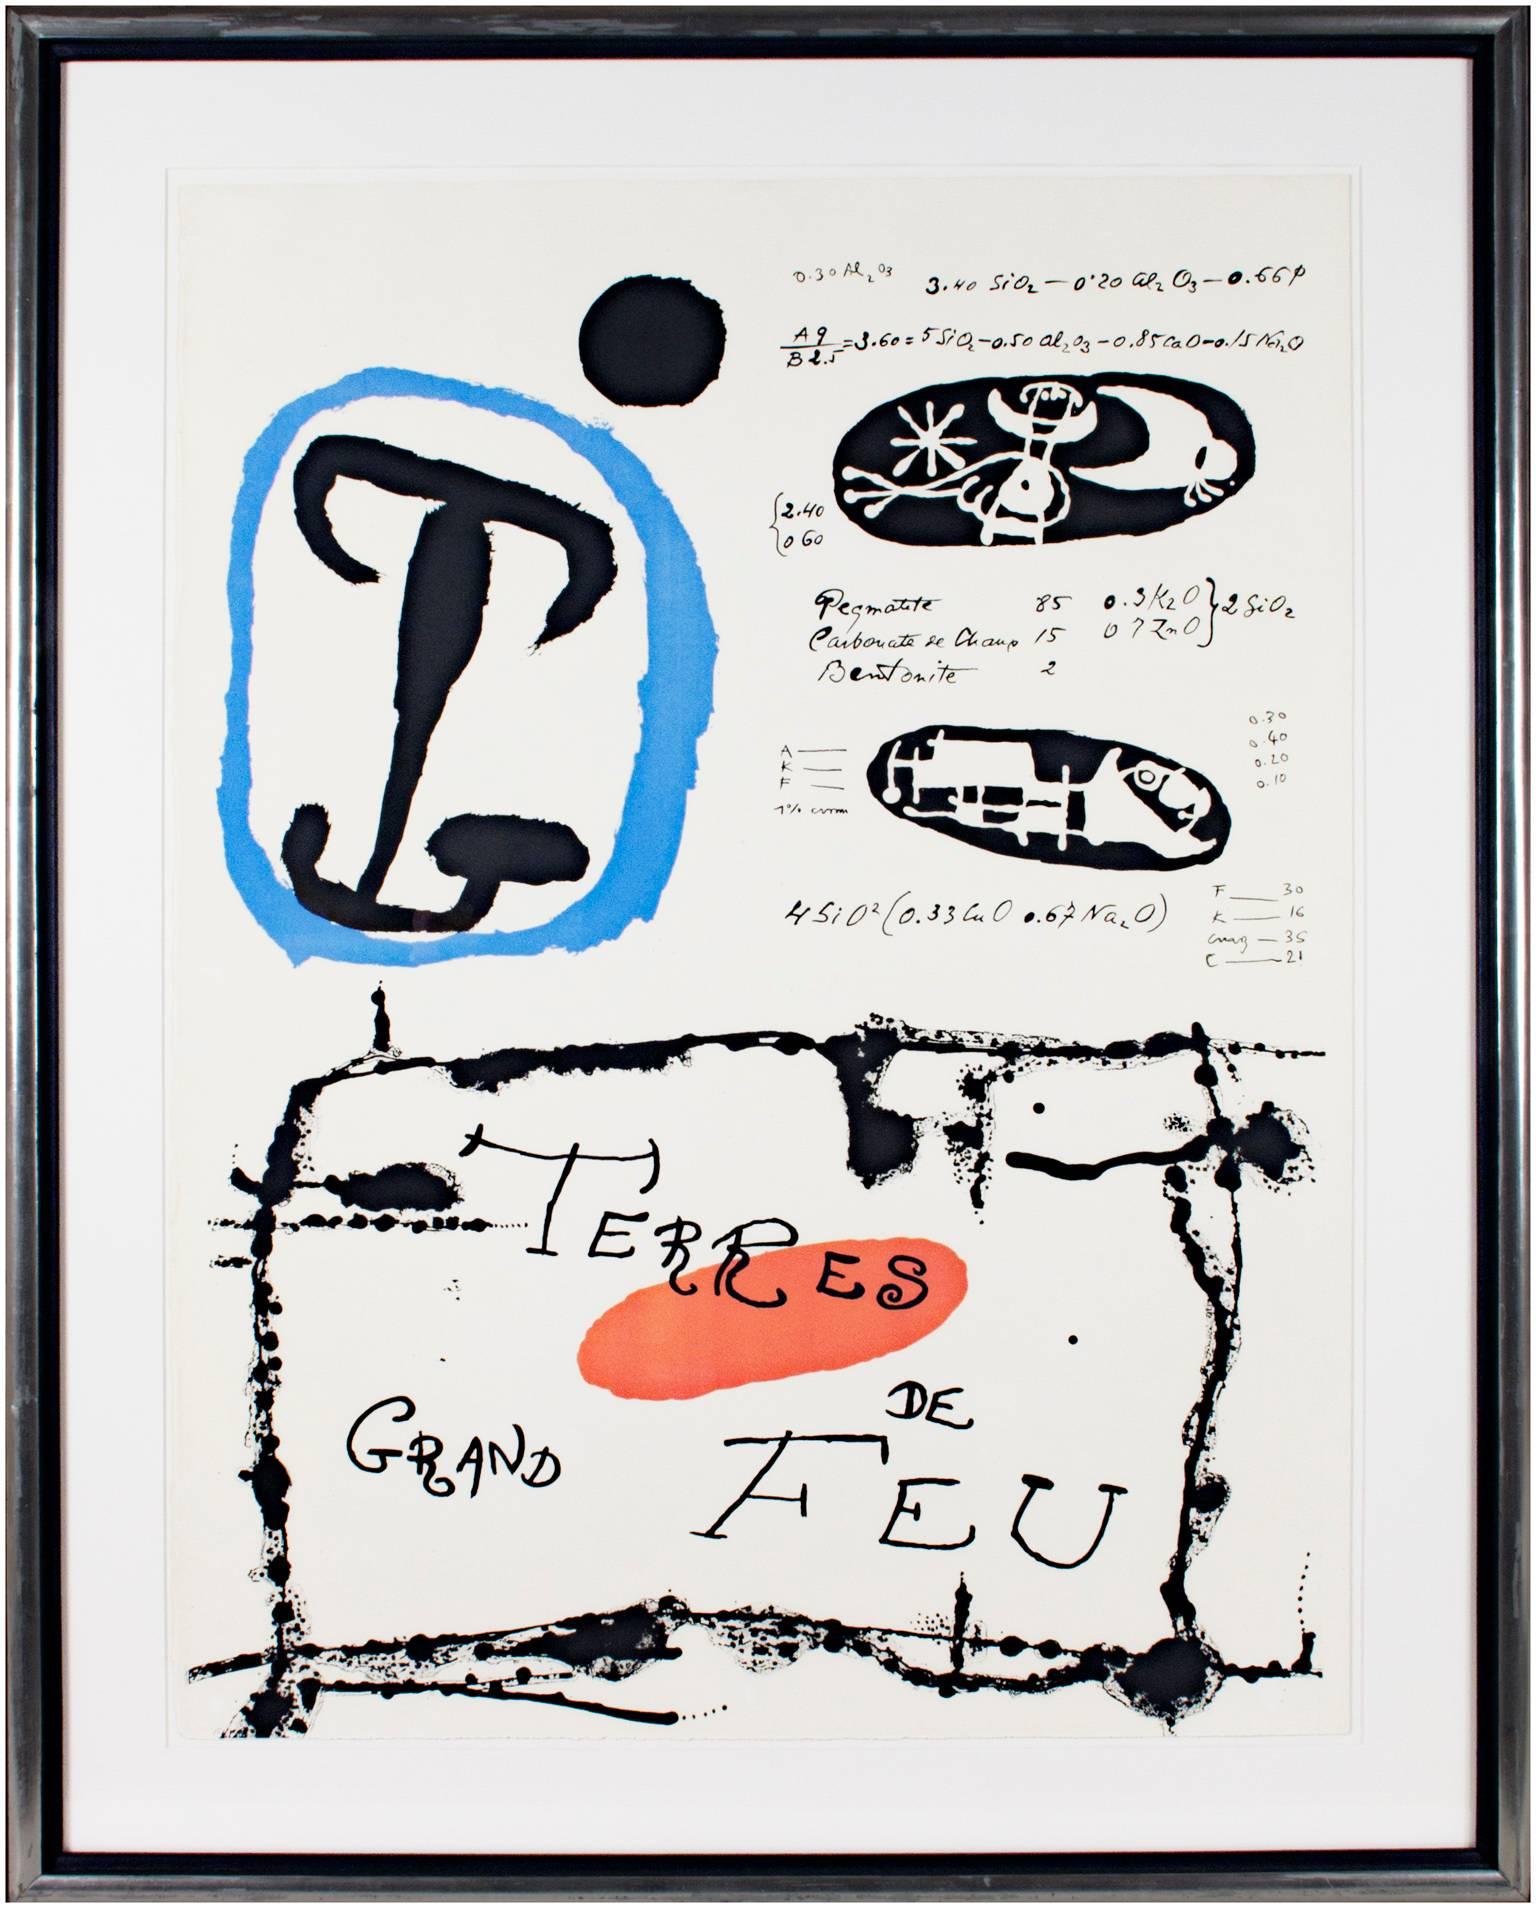 "Derrière le Miroir, Terres de Grand Feu" Original Color Lithograph by Joan Miro - Print by Joan Miró